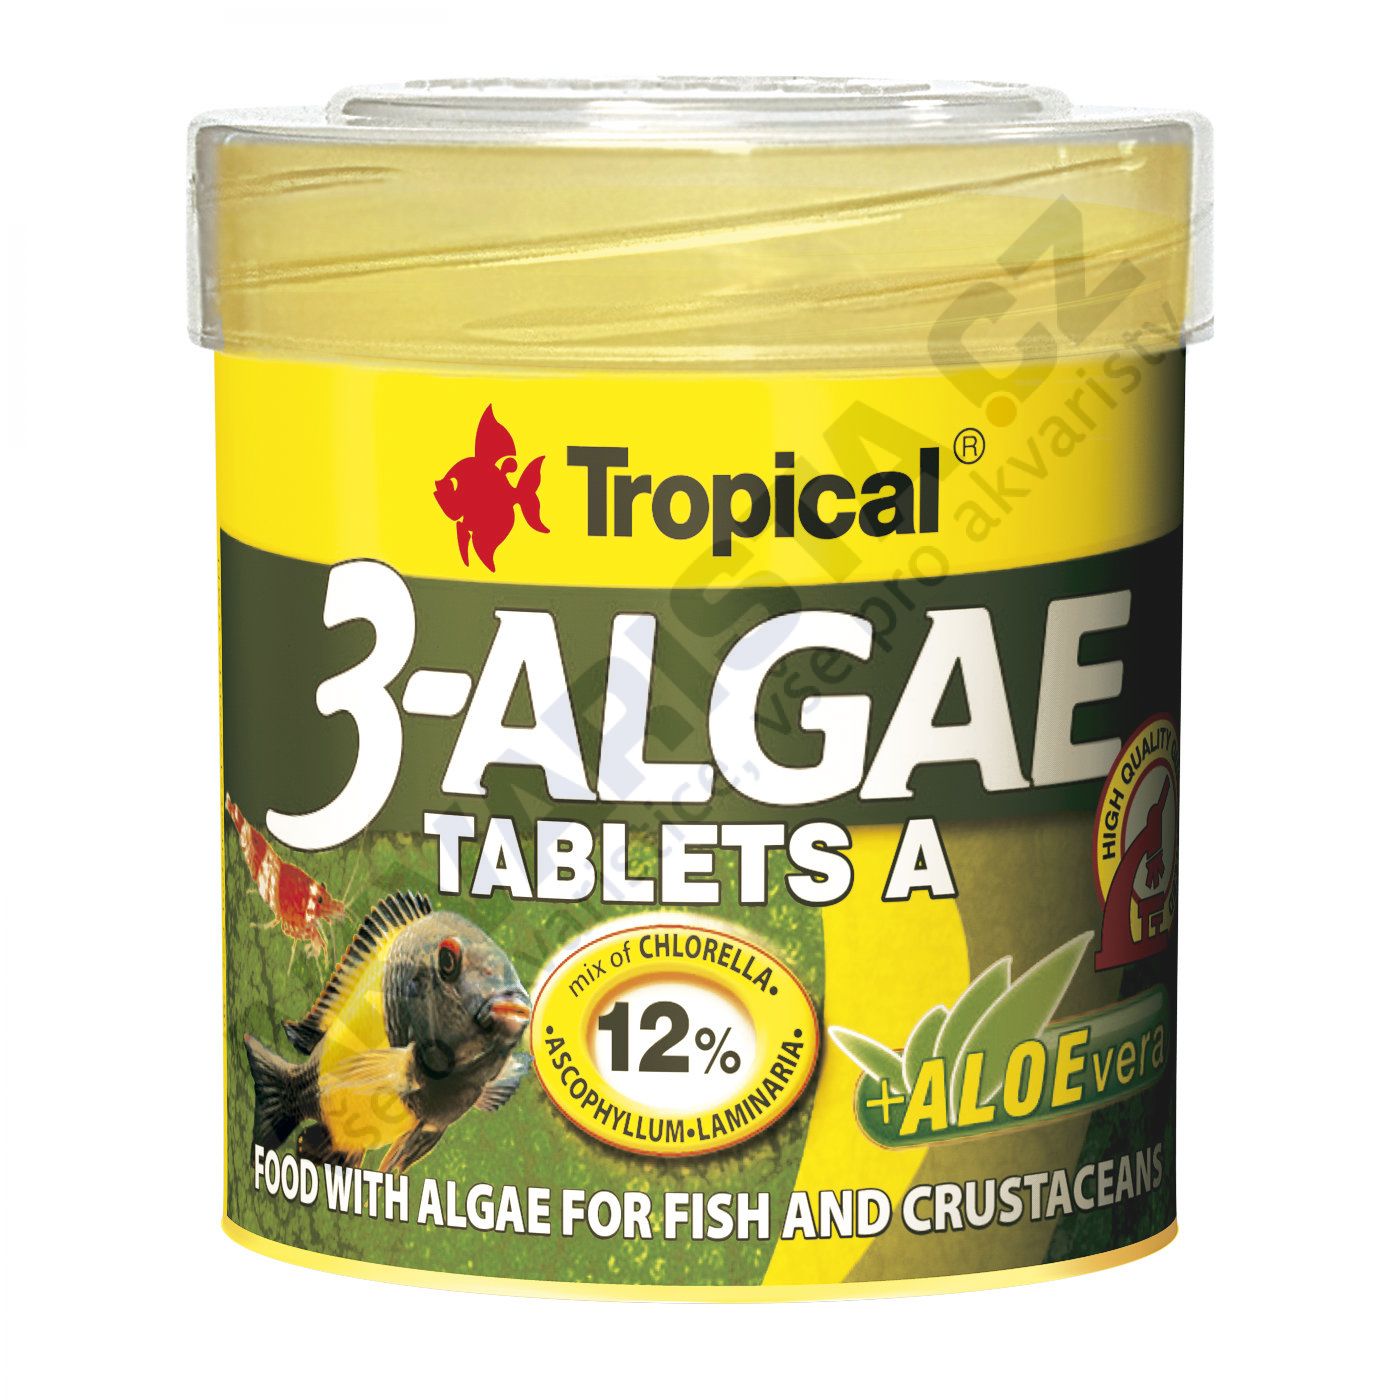 Tropical 3-algae tablets A (samolepící tablety) 50 ml